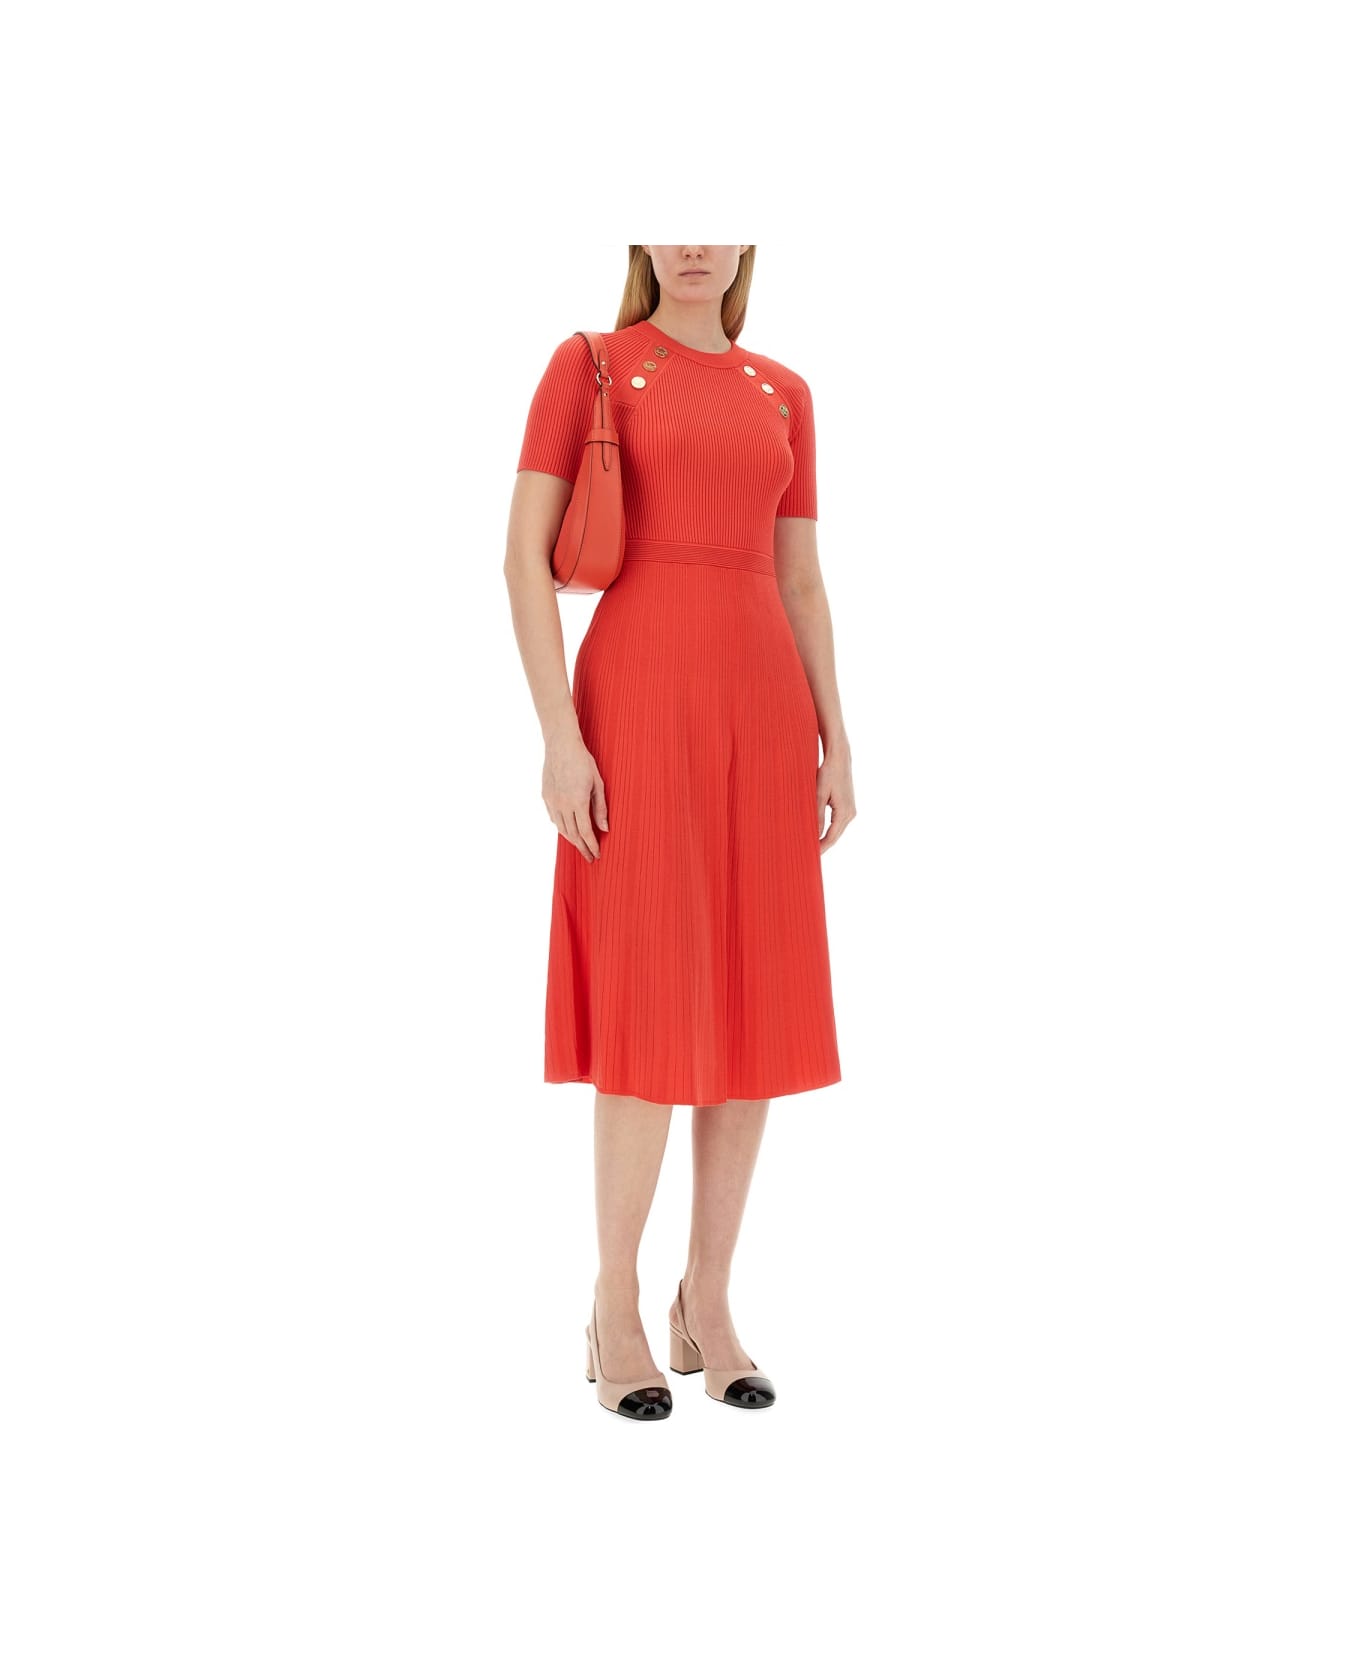 Michael Kors Knit Longuette Dress - RED